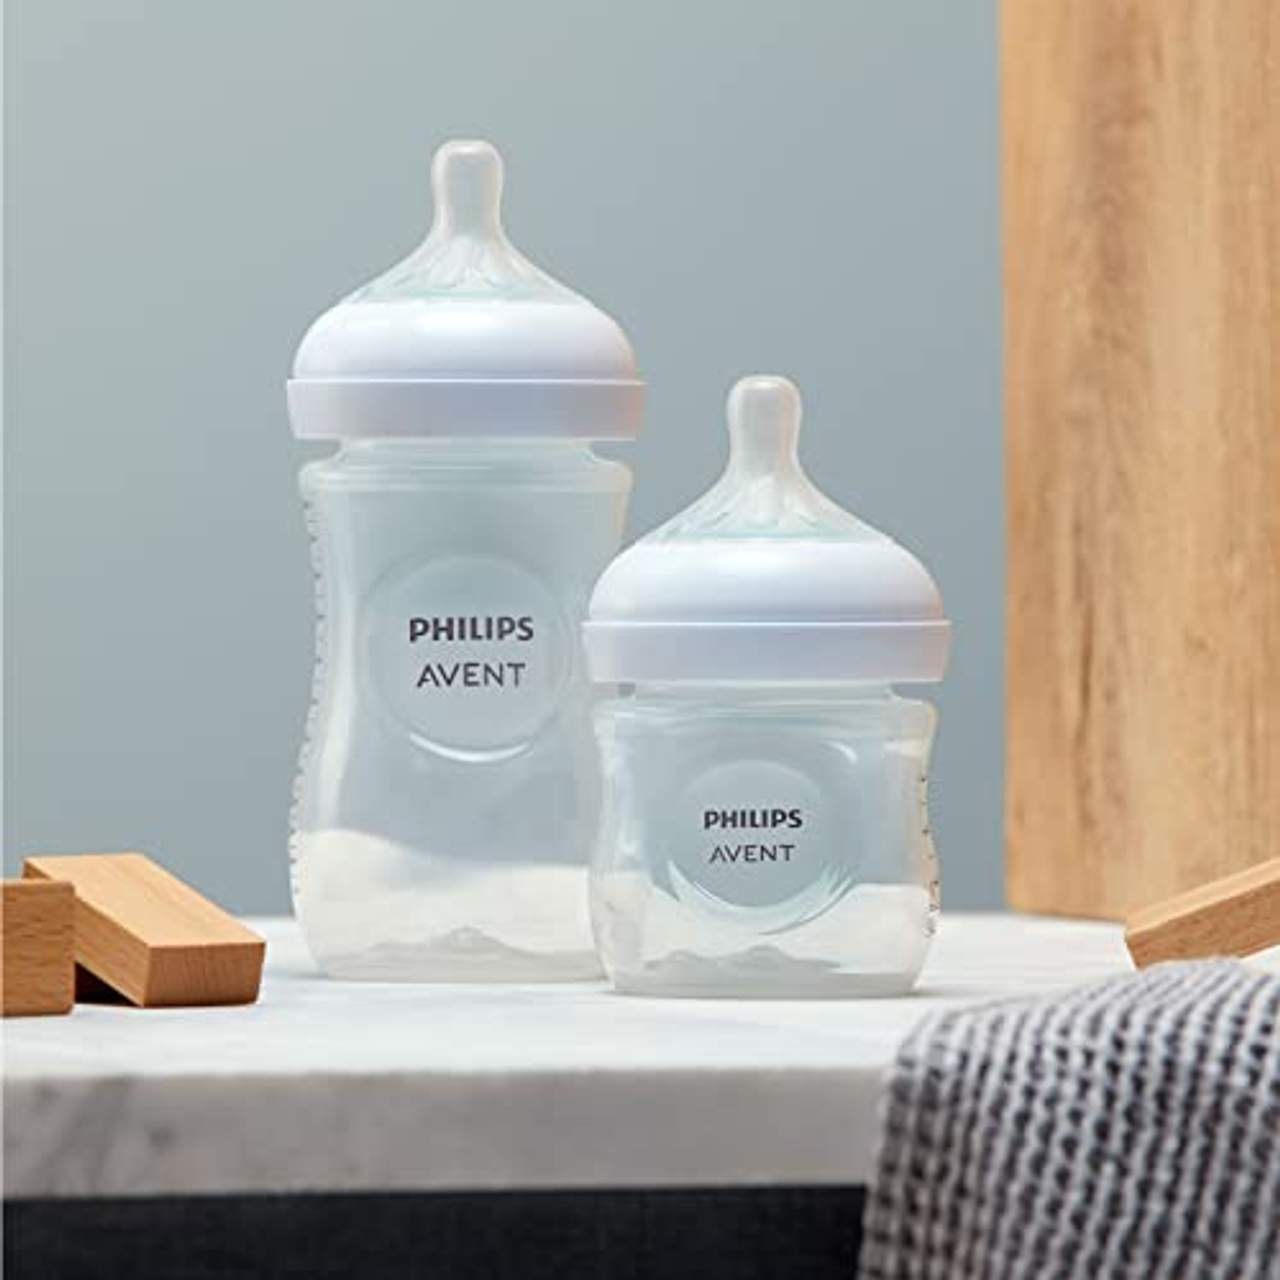 Philips Avent Babyflaschen Natural Response